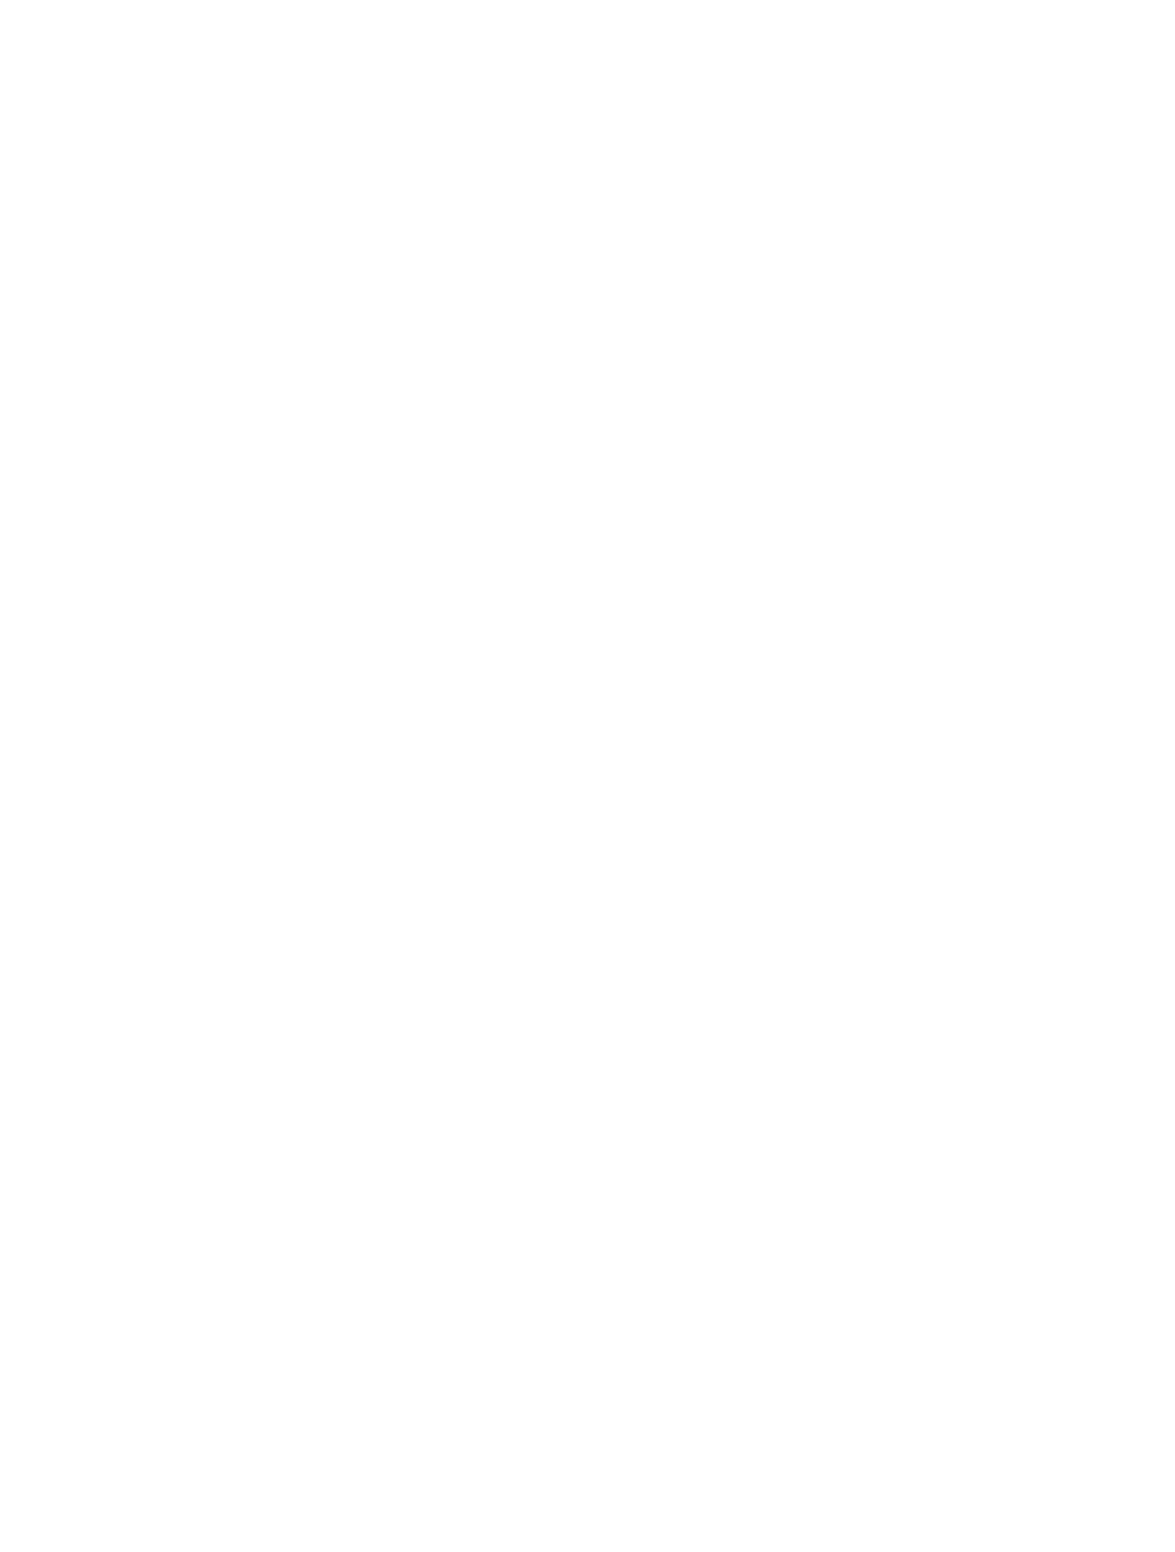 Aeterna Zentaris logo pour fonds sombres (PNG transparent)